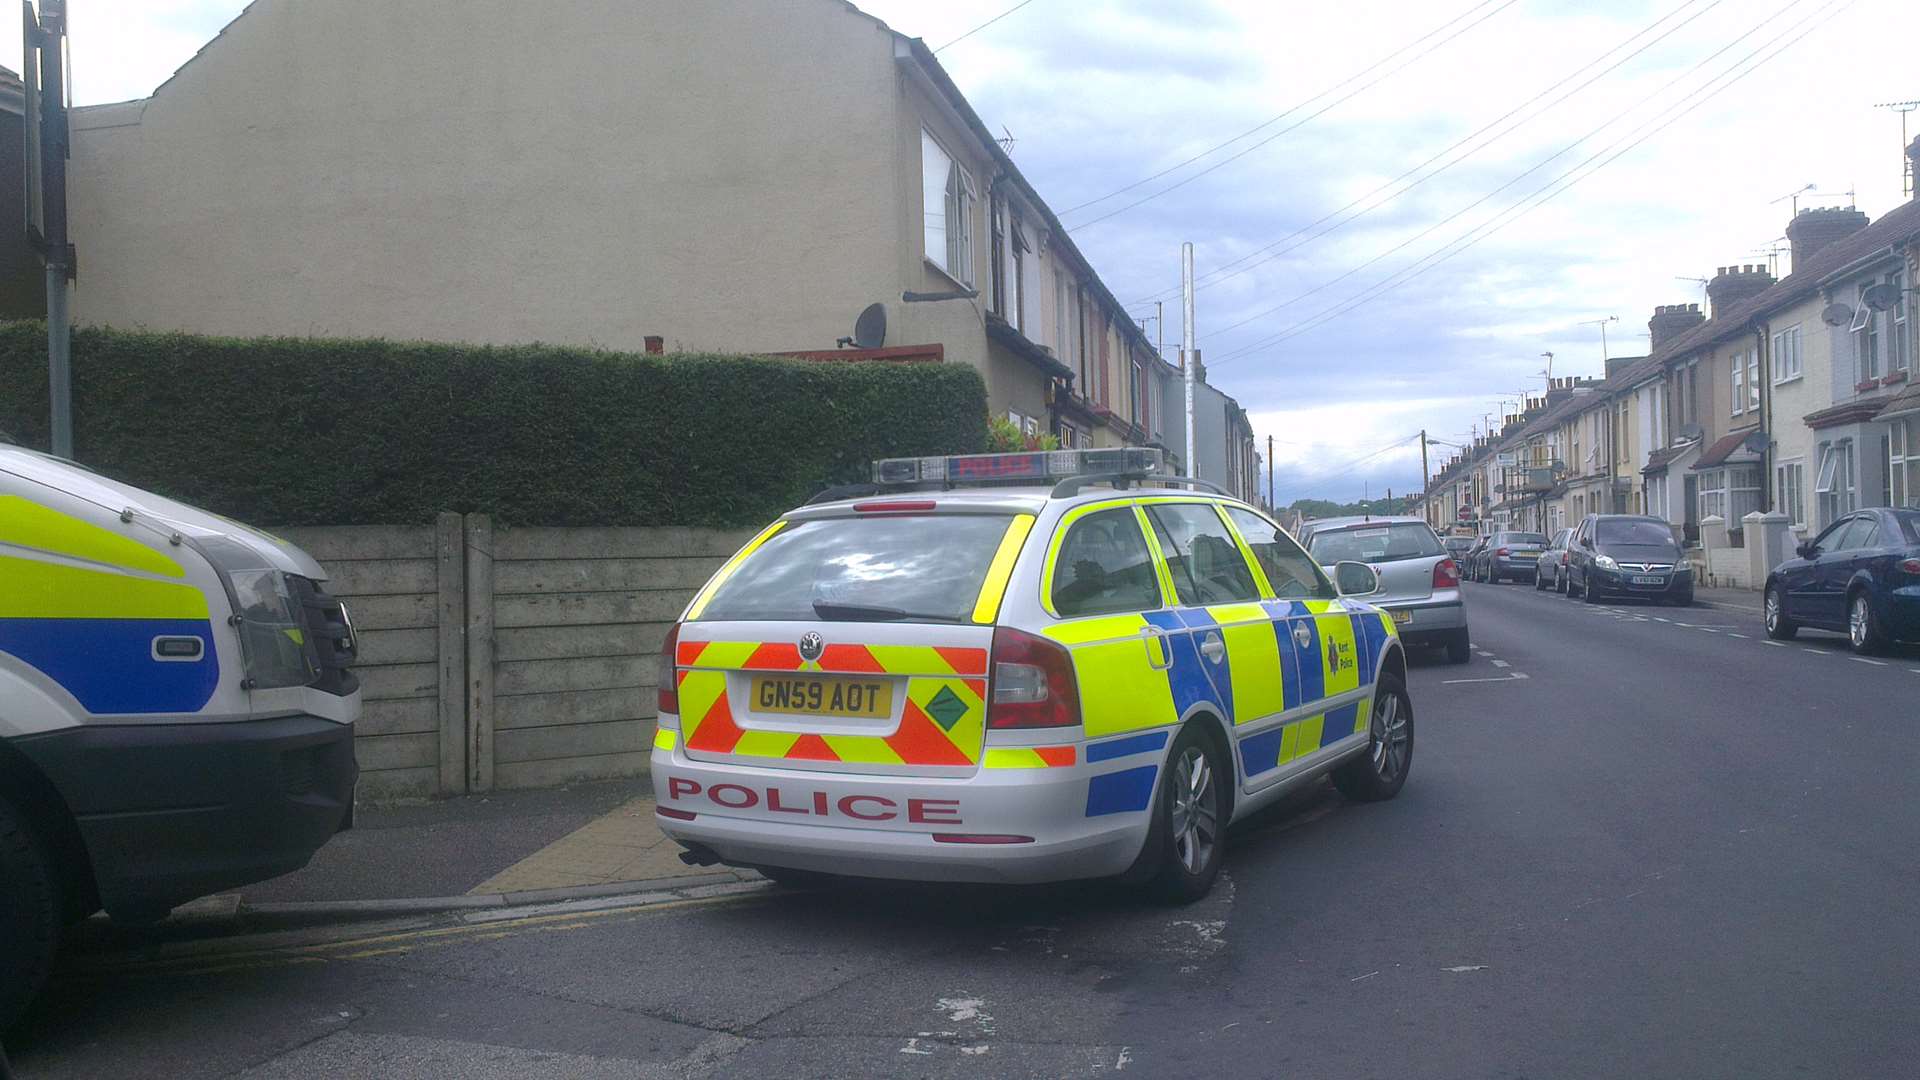 Police vehicles on East Street, Gillingham